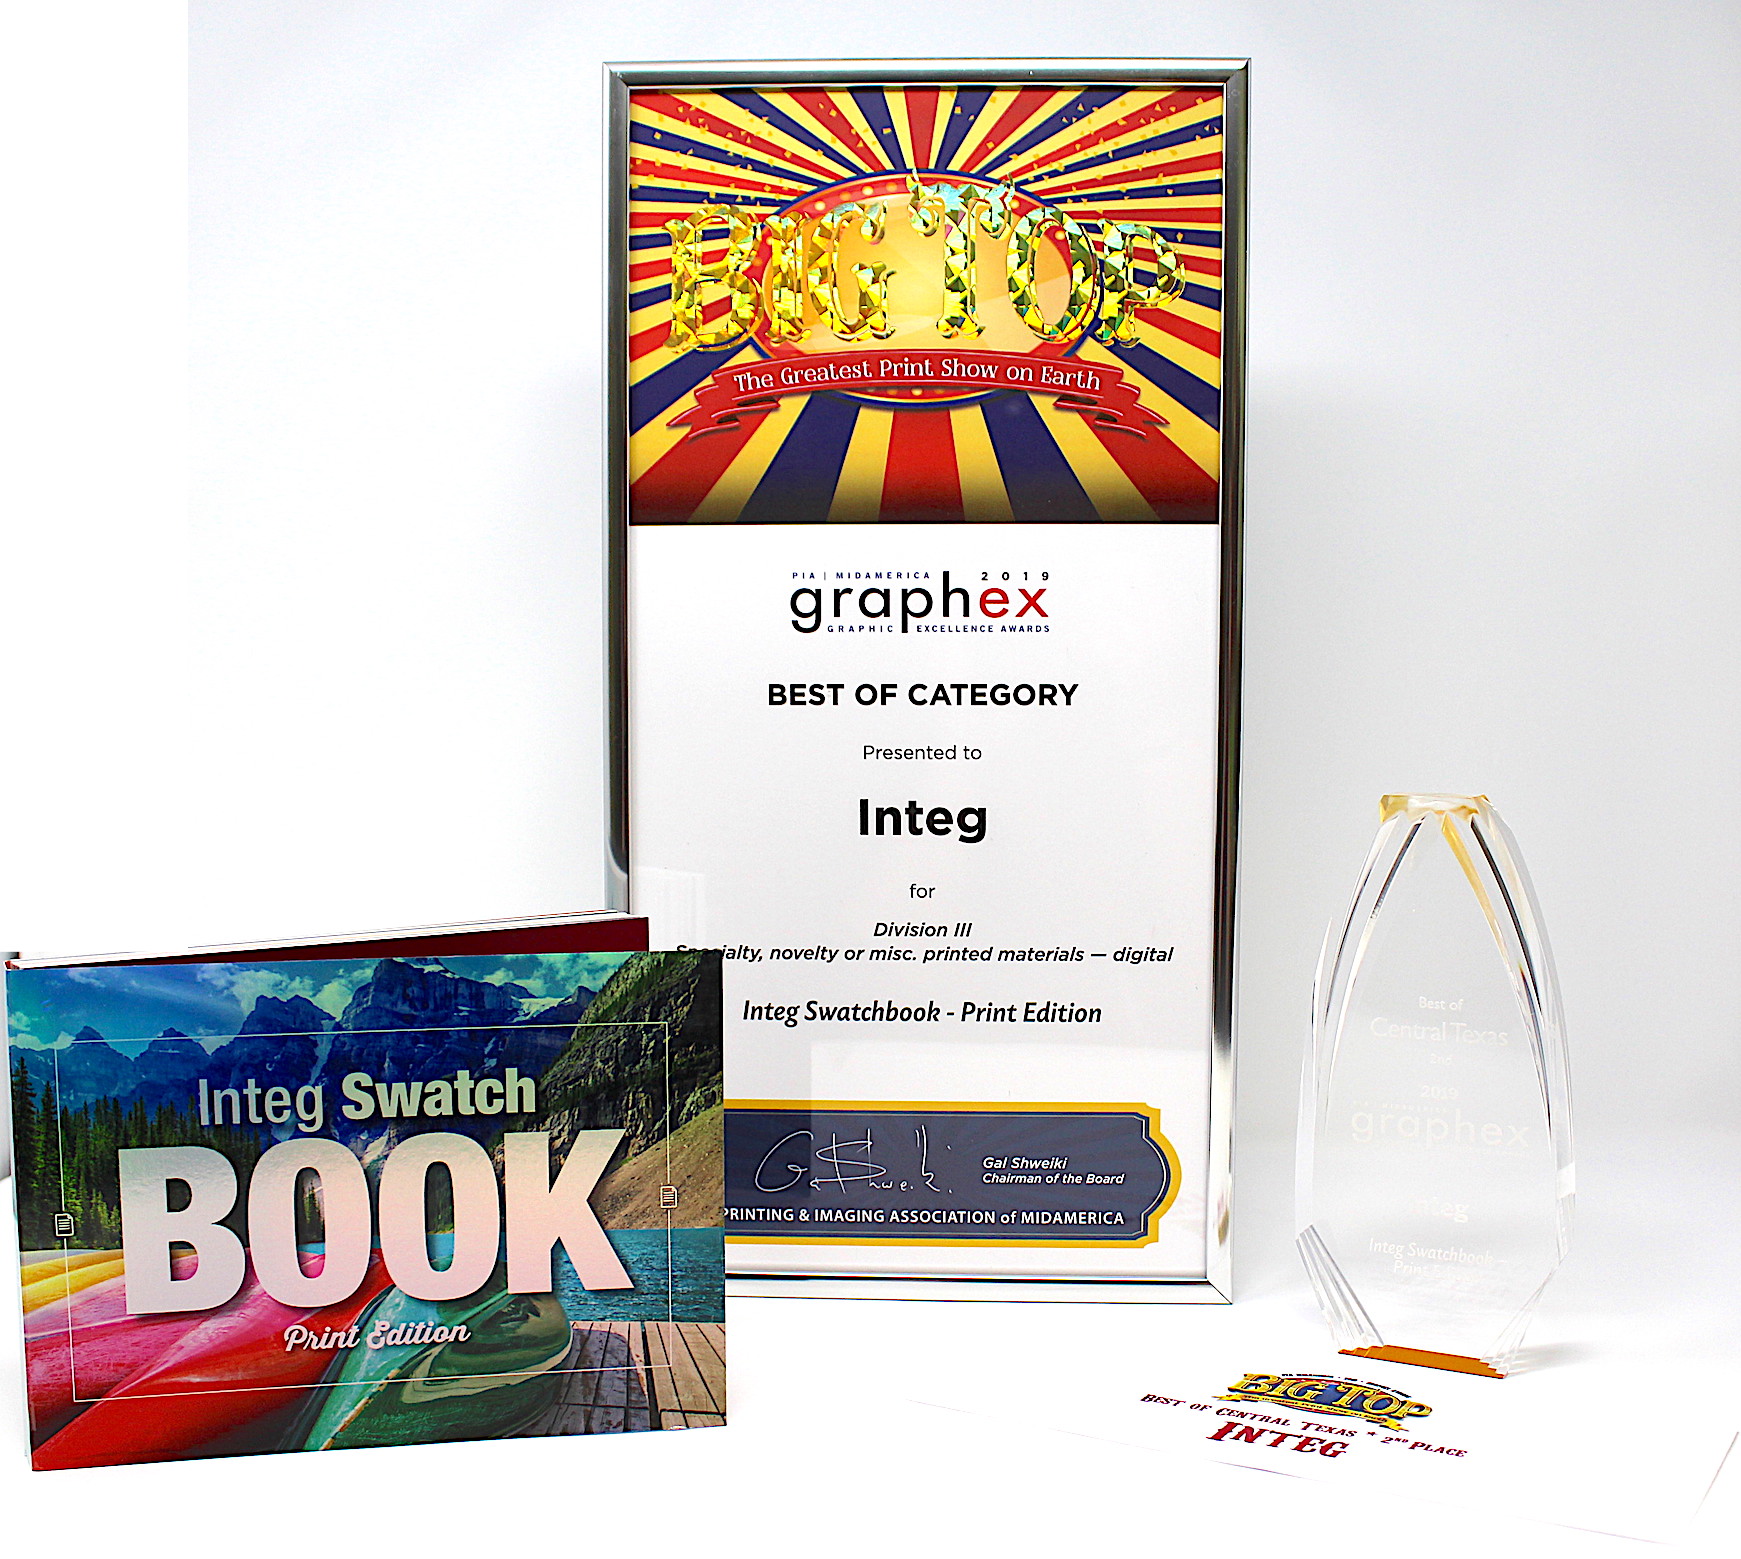 Integ Graphex Awards